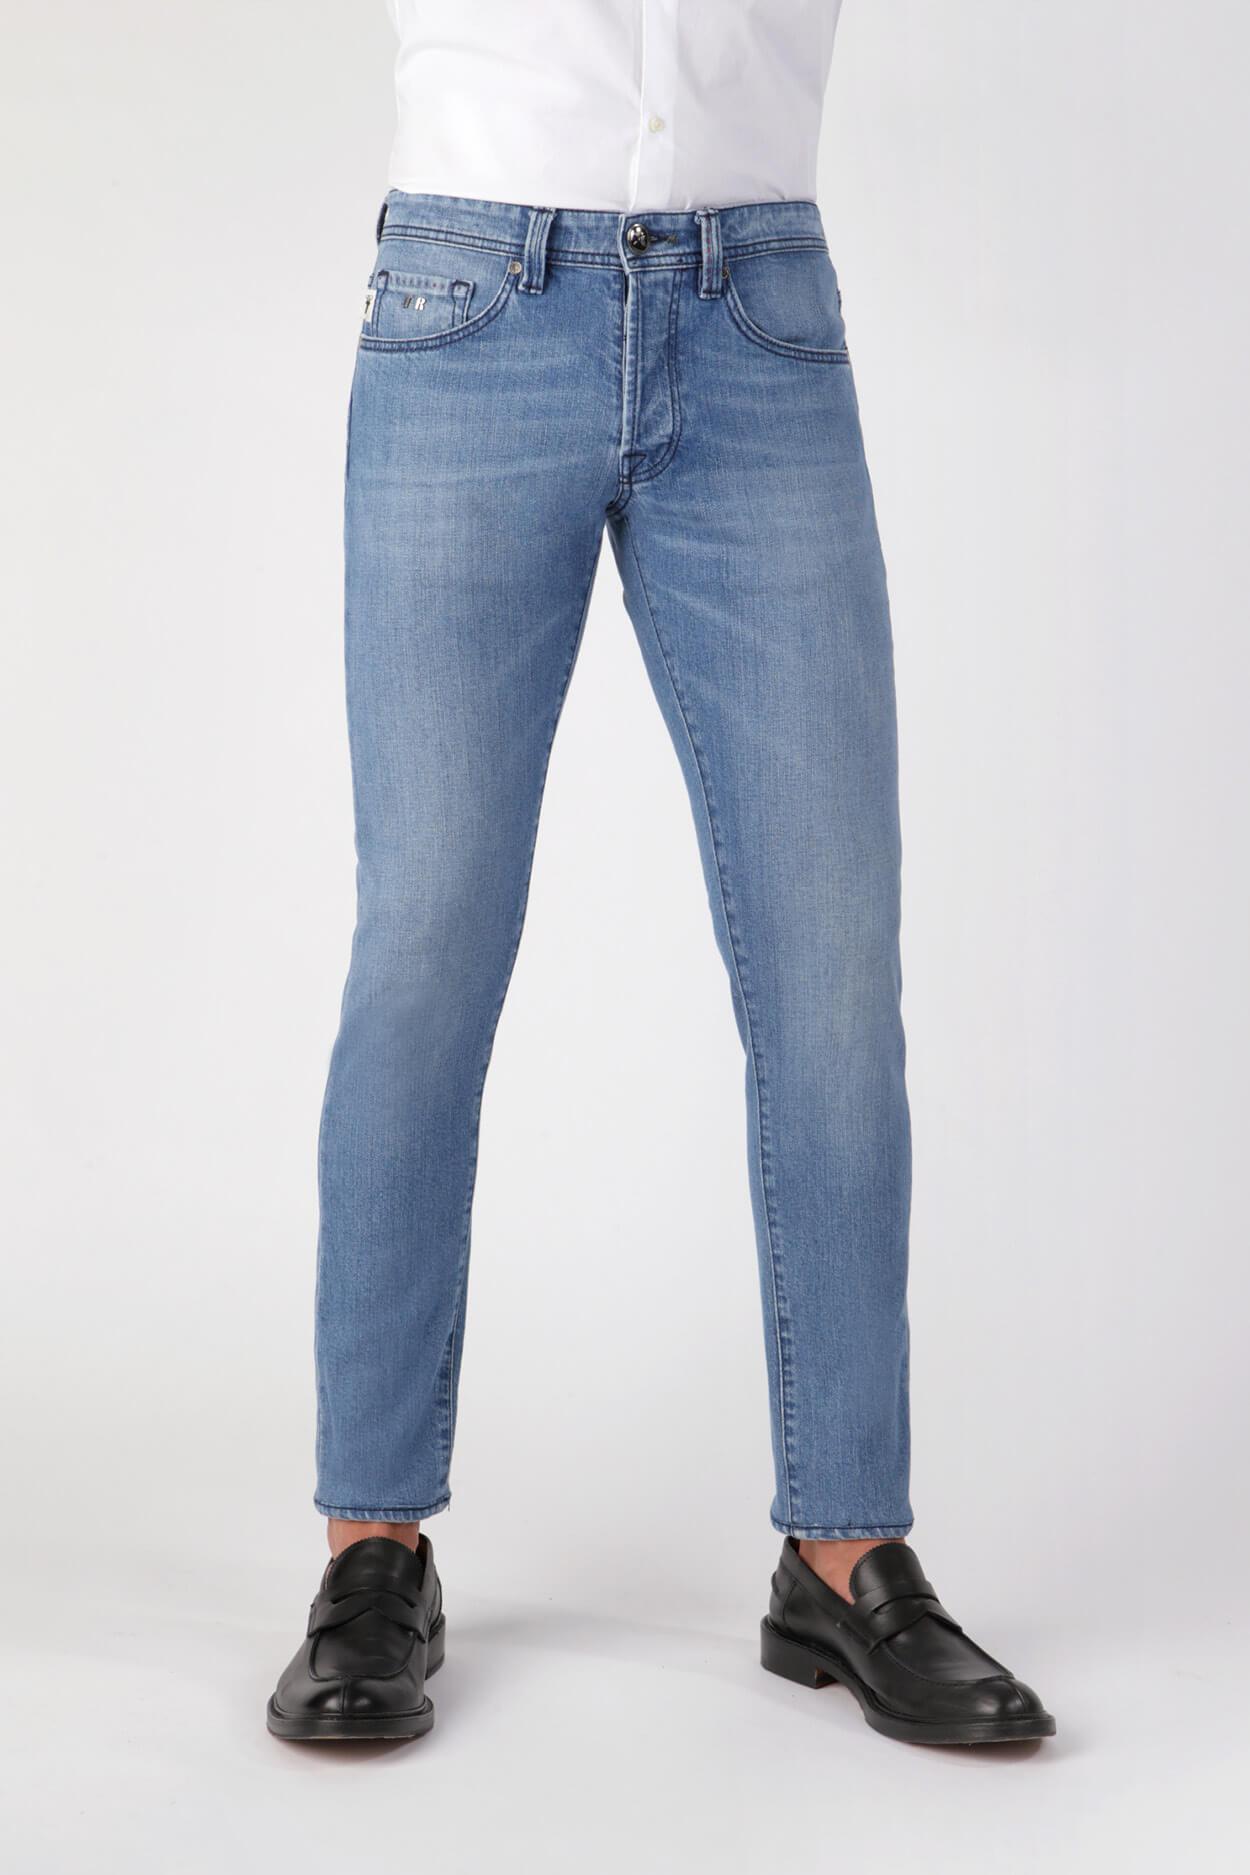 Tramarossa Jeans - DENIM VINTAGE - Model: 19.80